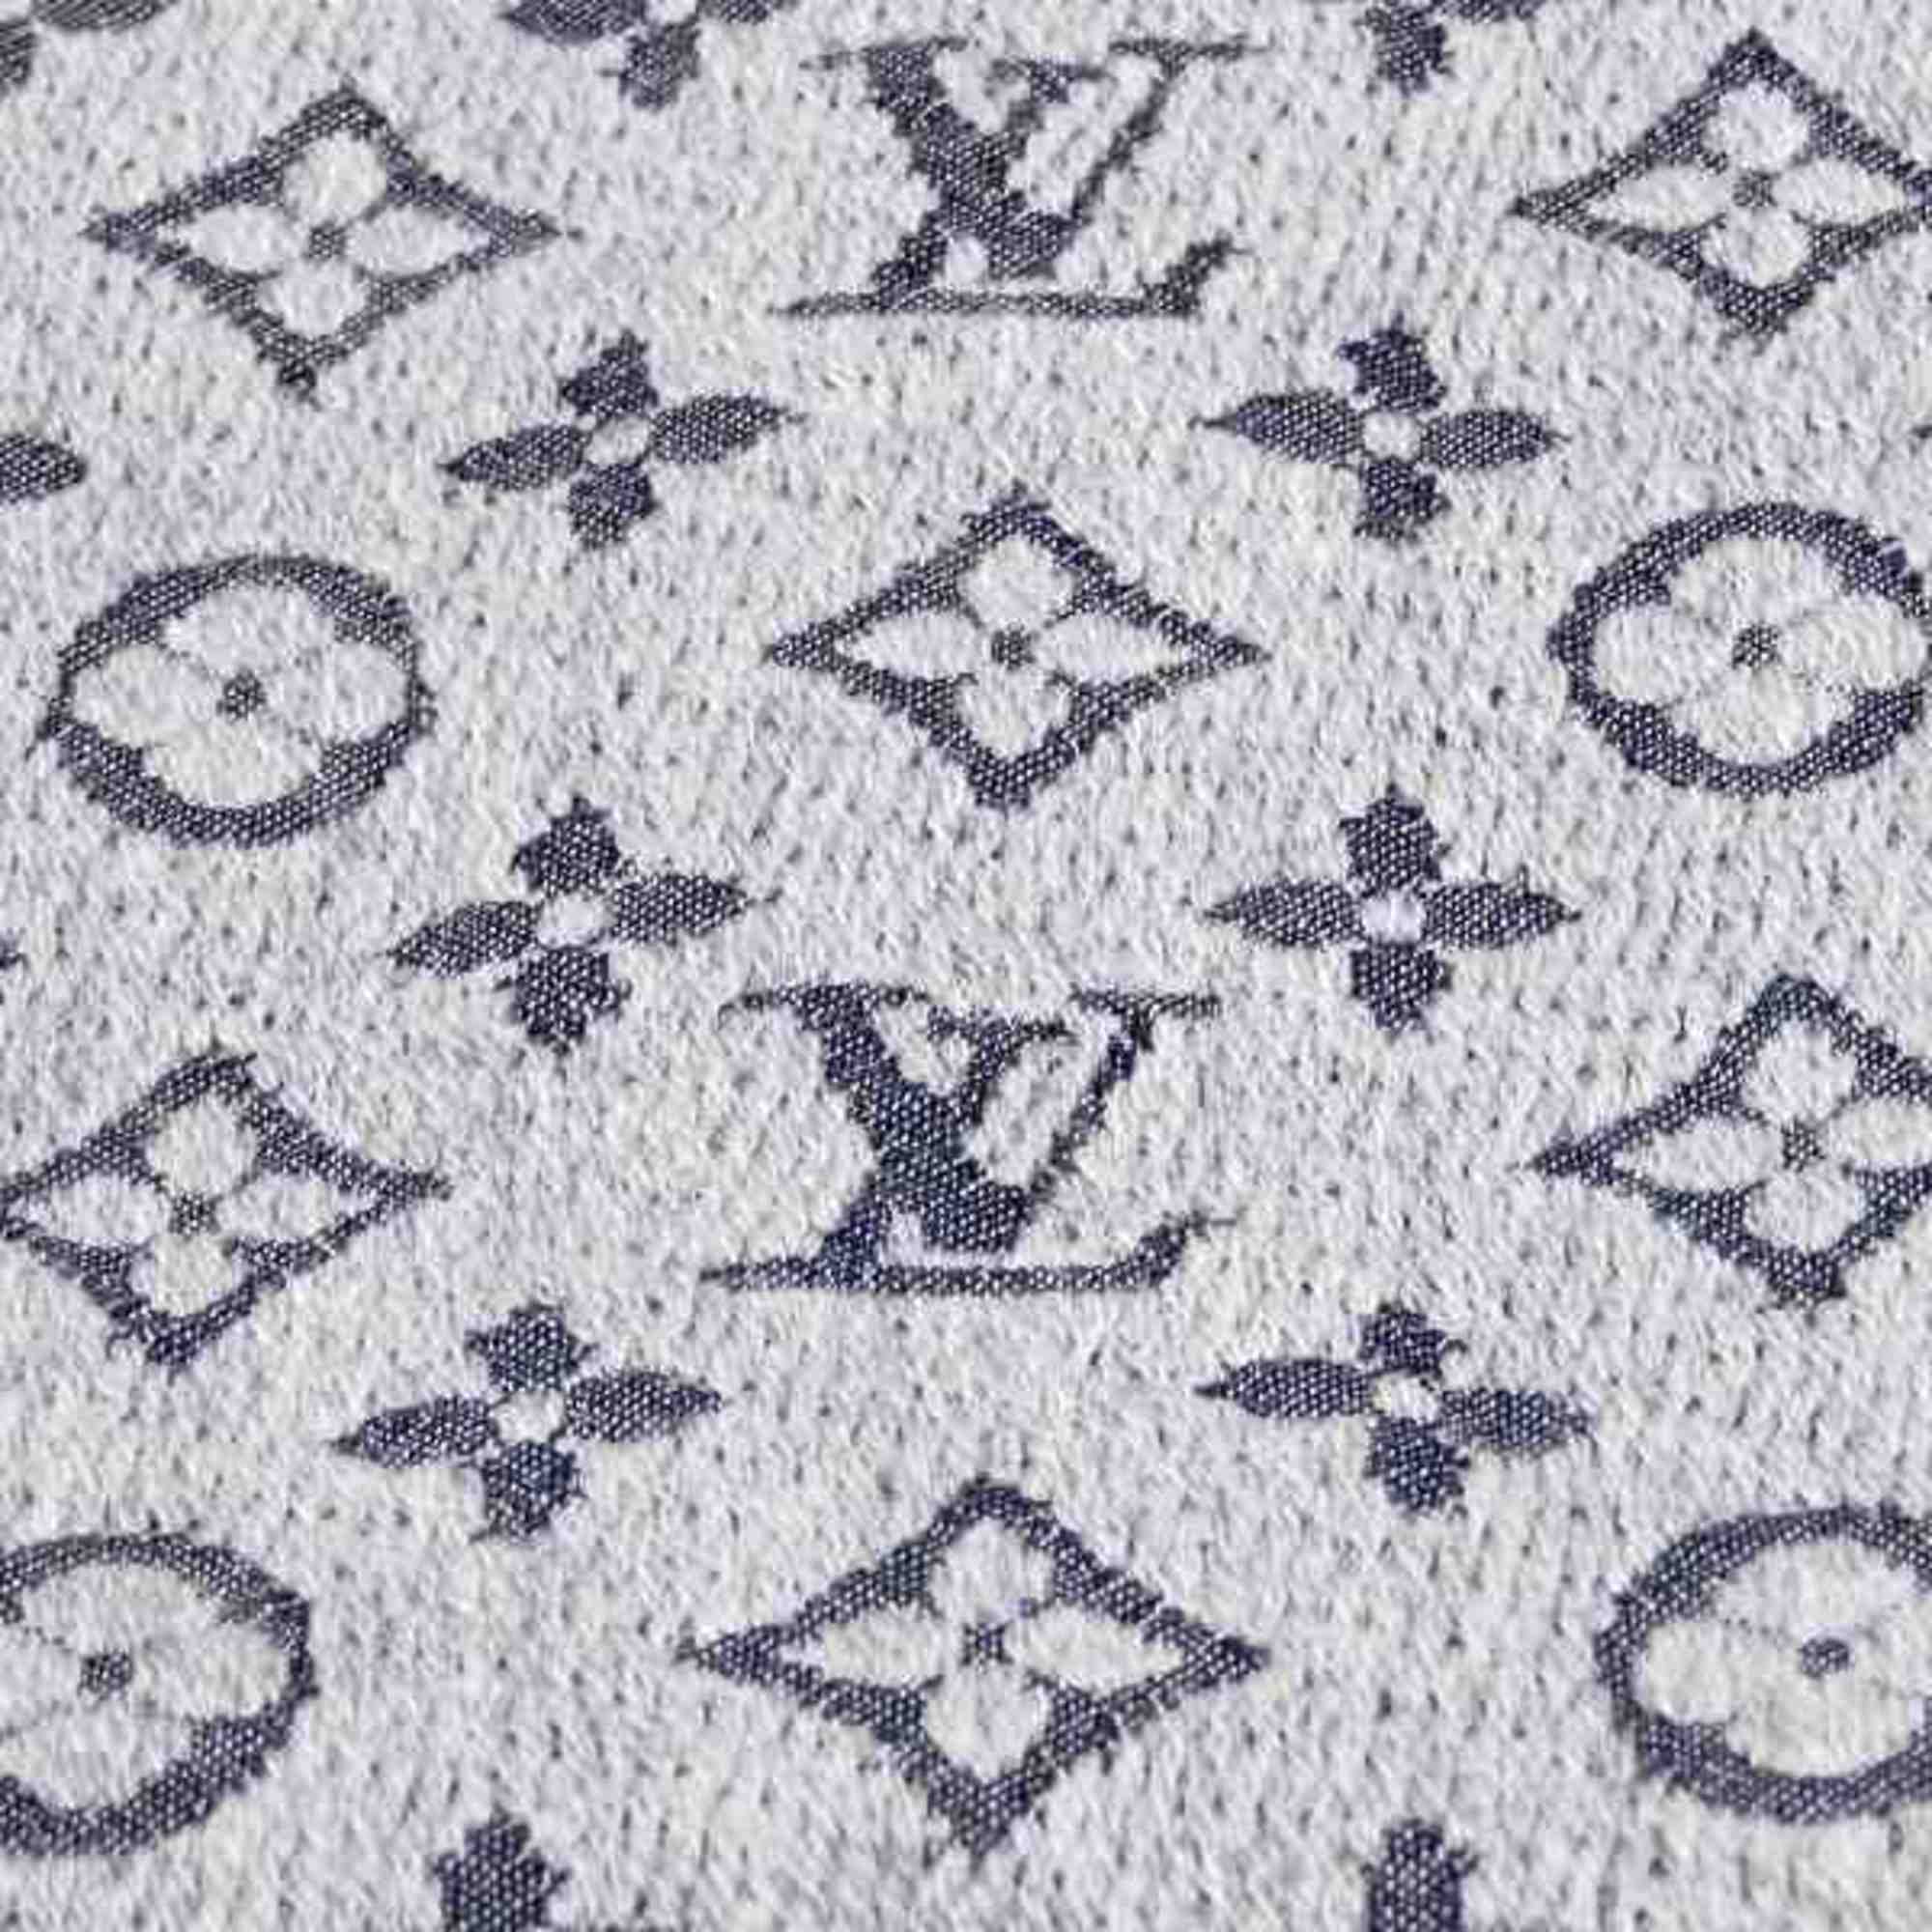 Louis Vuitton Monogram Echarpe Classic M70932 Scarf Men's Women's Accessories